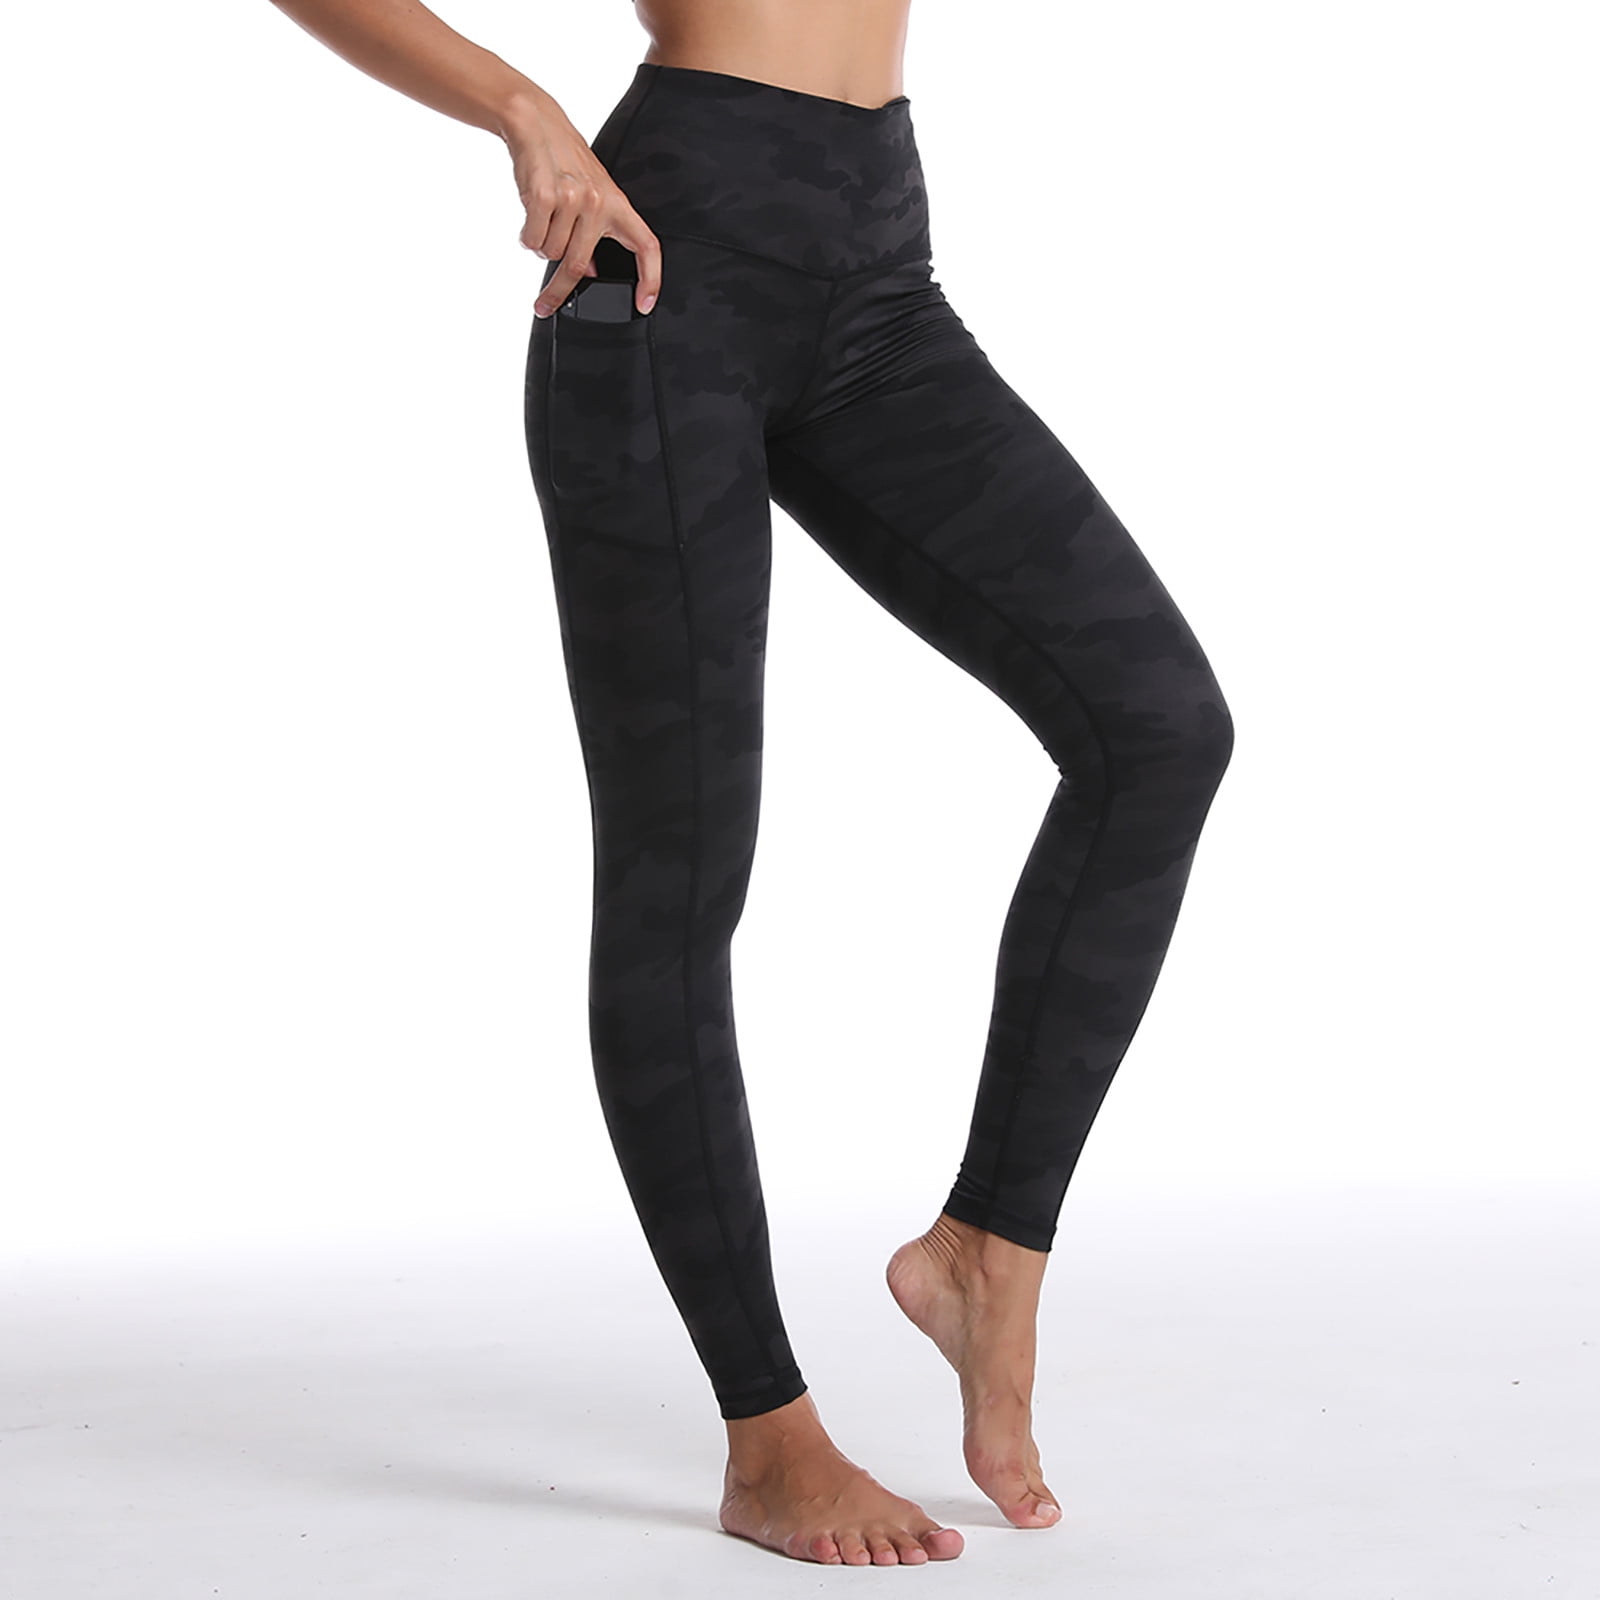 LWZWM Workout Legging 3D Printed Butt Lifting Yoga Pants for Women Teens  Girls Sports Fashion Casual High Waist Pocket Mesh Leggings Yoga Pants  Black L 